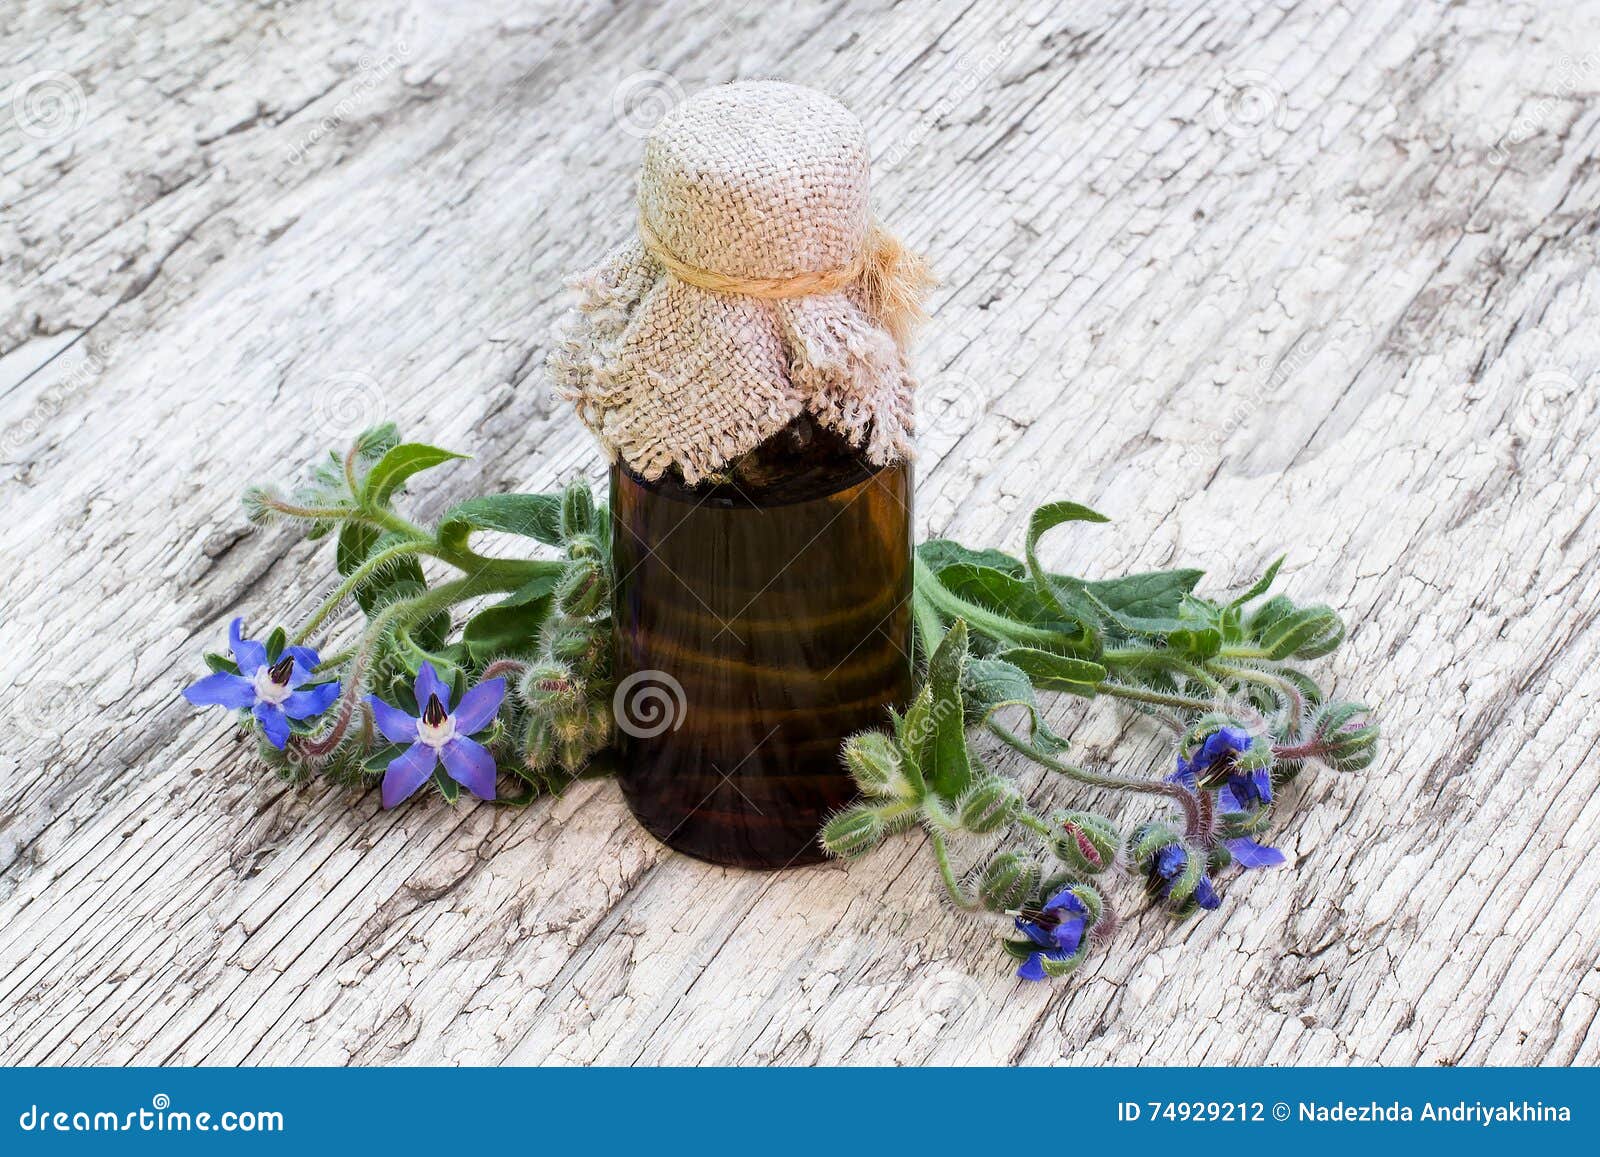 borage (borago officinalis) and borage oil